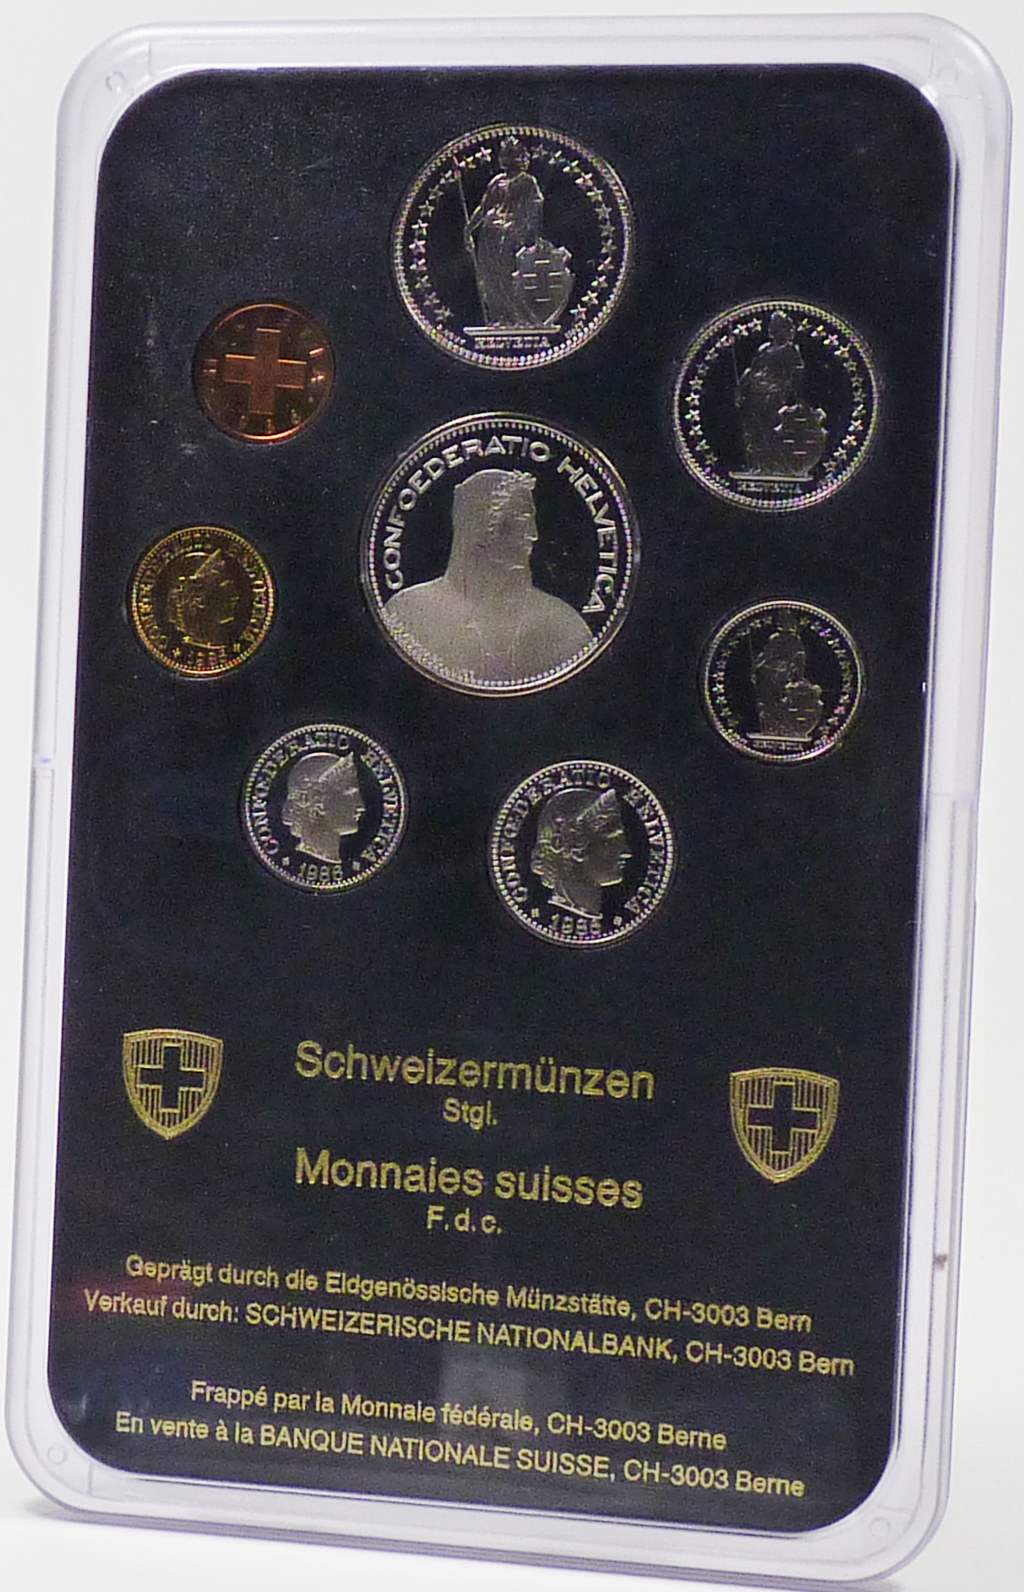 Schweiz Kursmünzensatz 1986 stempelglanz OVP